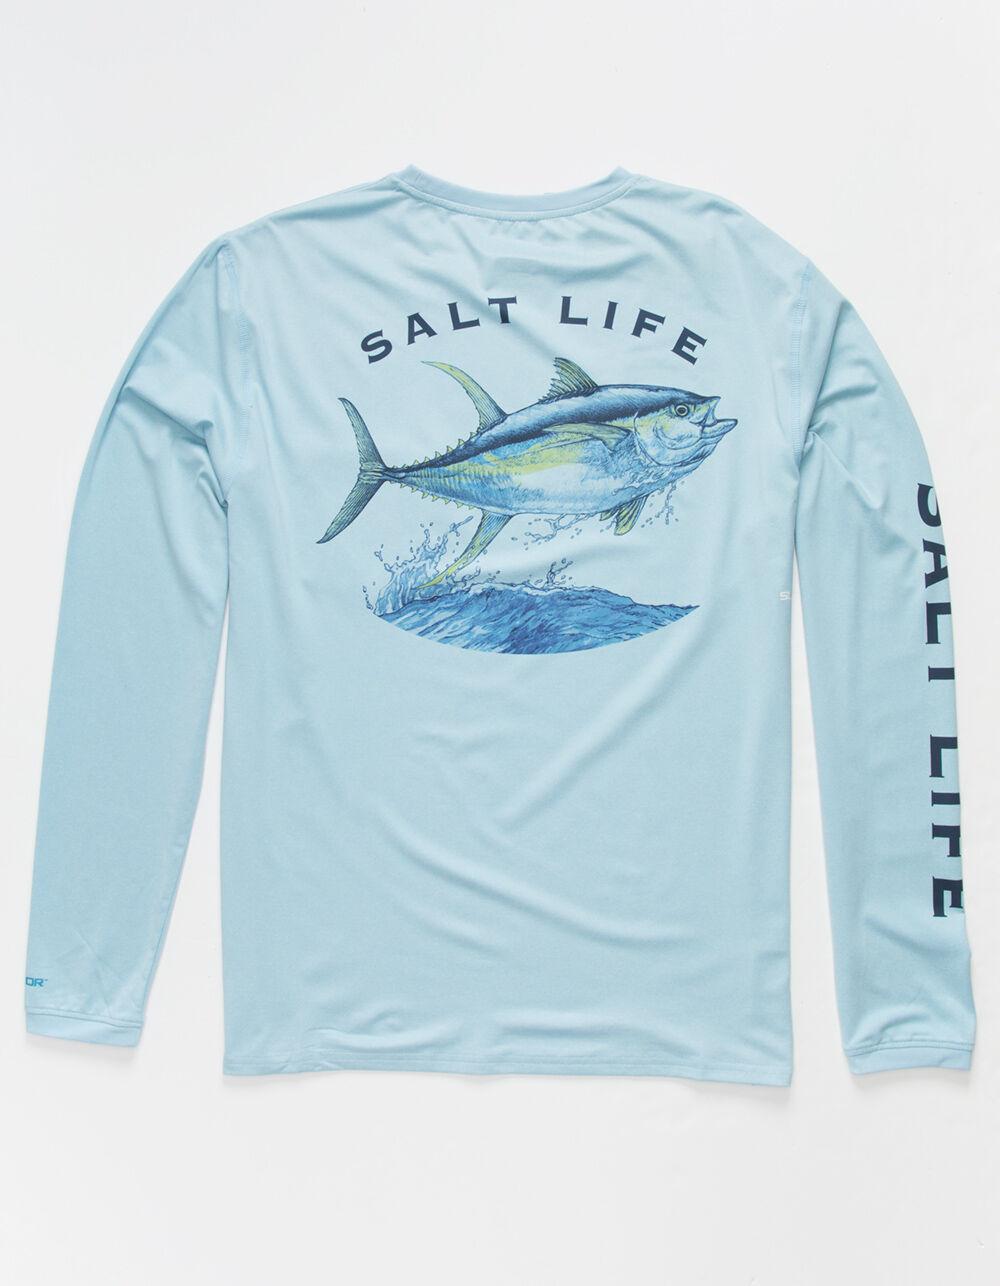 SALT LIFE Tuna Bound Mens UV Pocket Tee - LIGHT YELLOW | Tillys